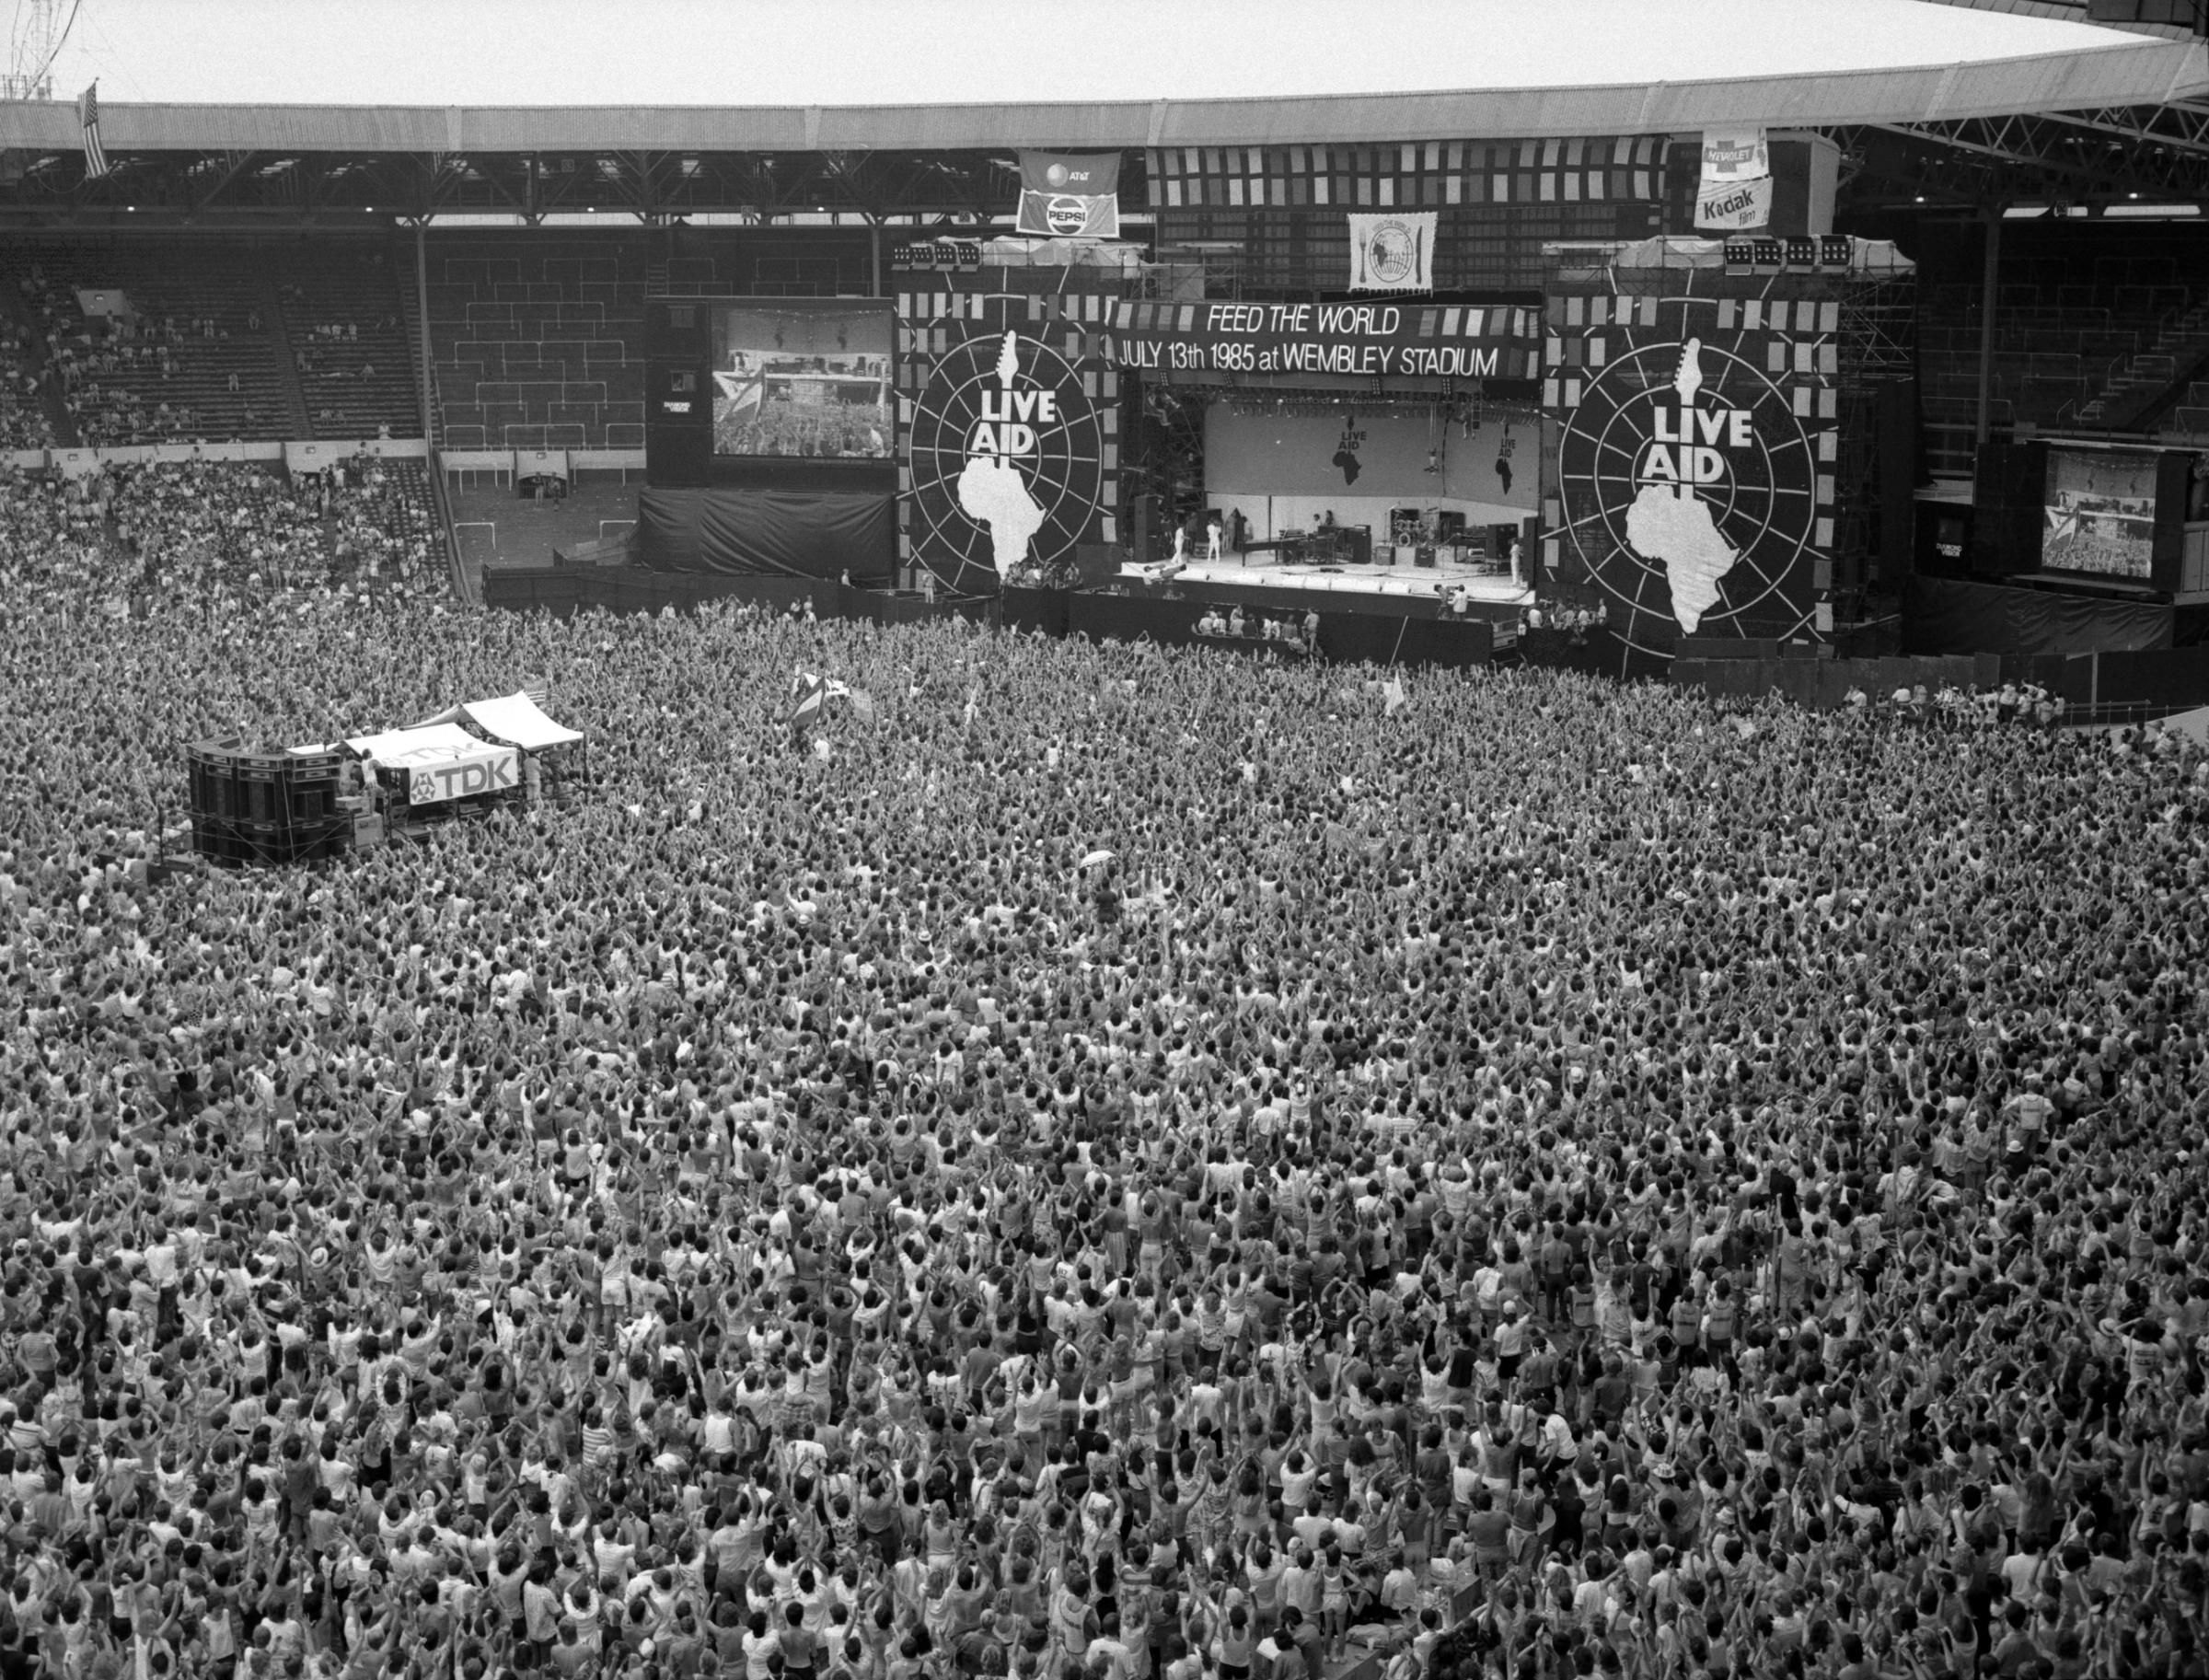 Фредди стадион уэмбли. Концерт Квин Уэмбли 1985. Куин 1985 стадион Уэмбли. Фредди Меркьюри концерт Уэмбли 1985. Концерт Live Aid 1985 Queen.